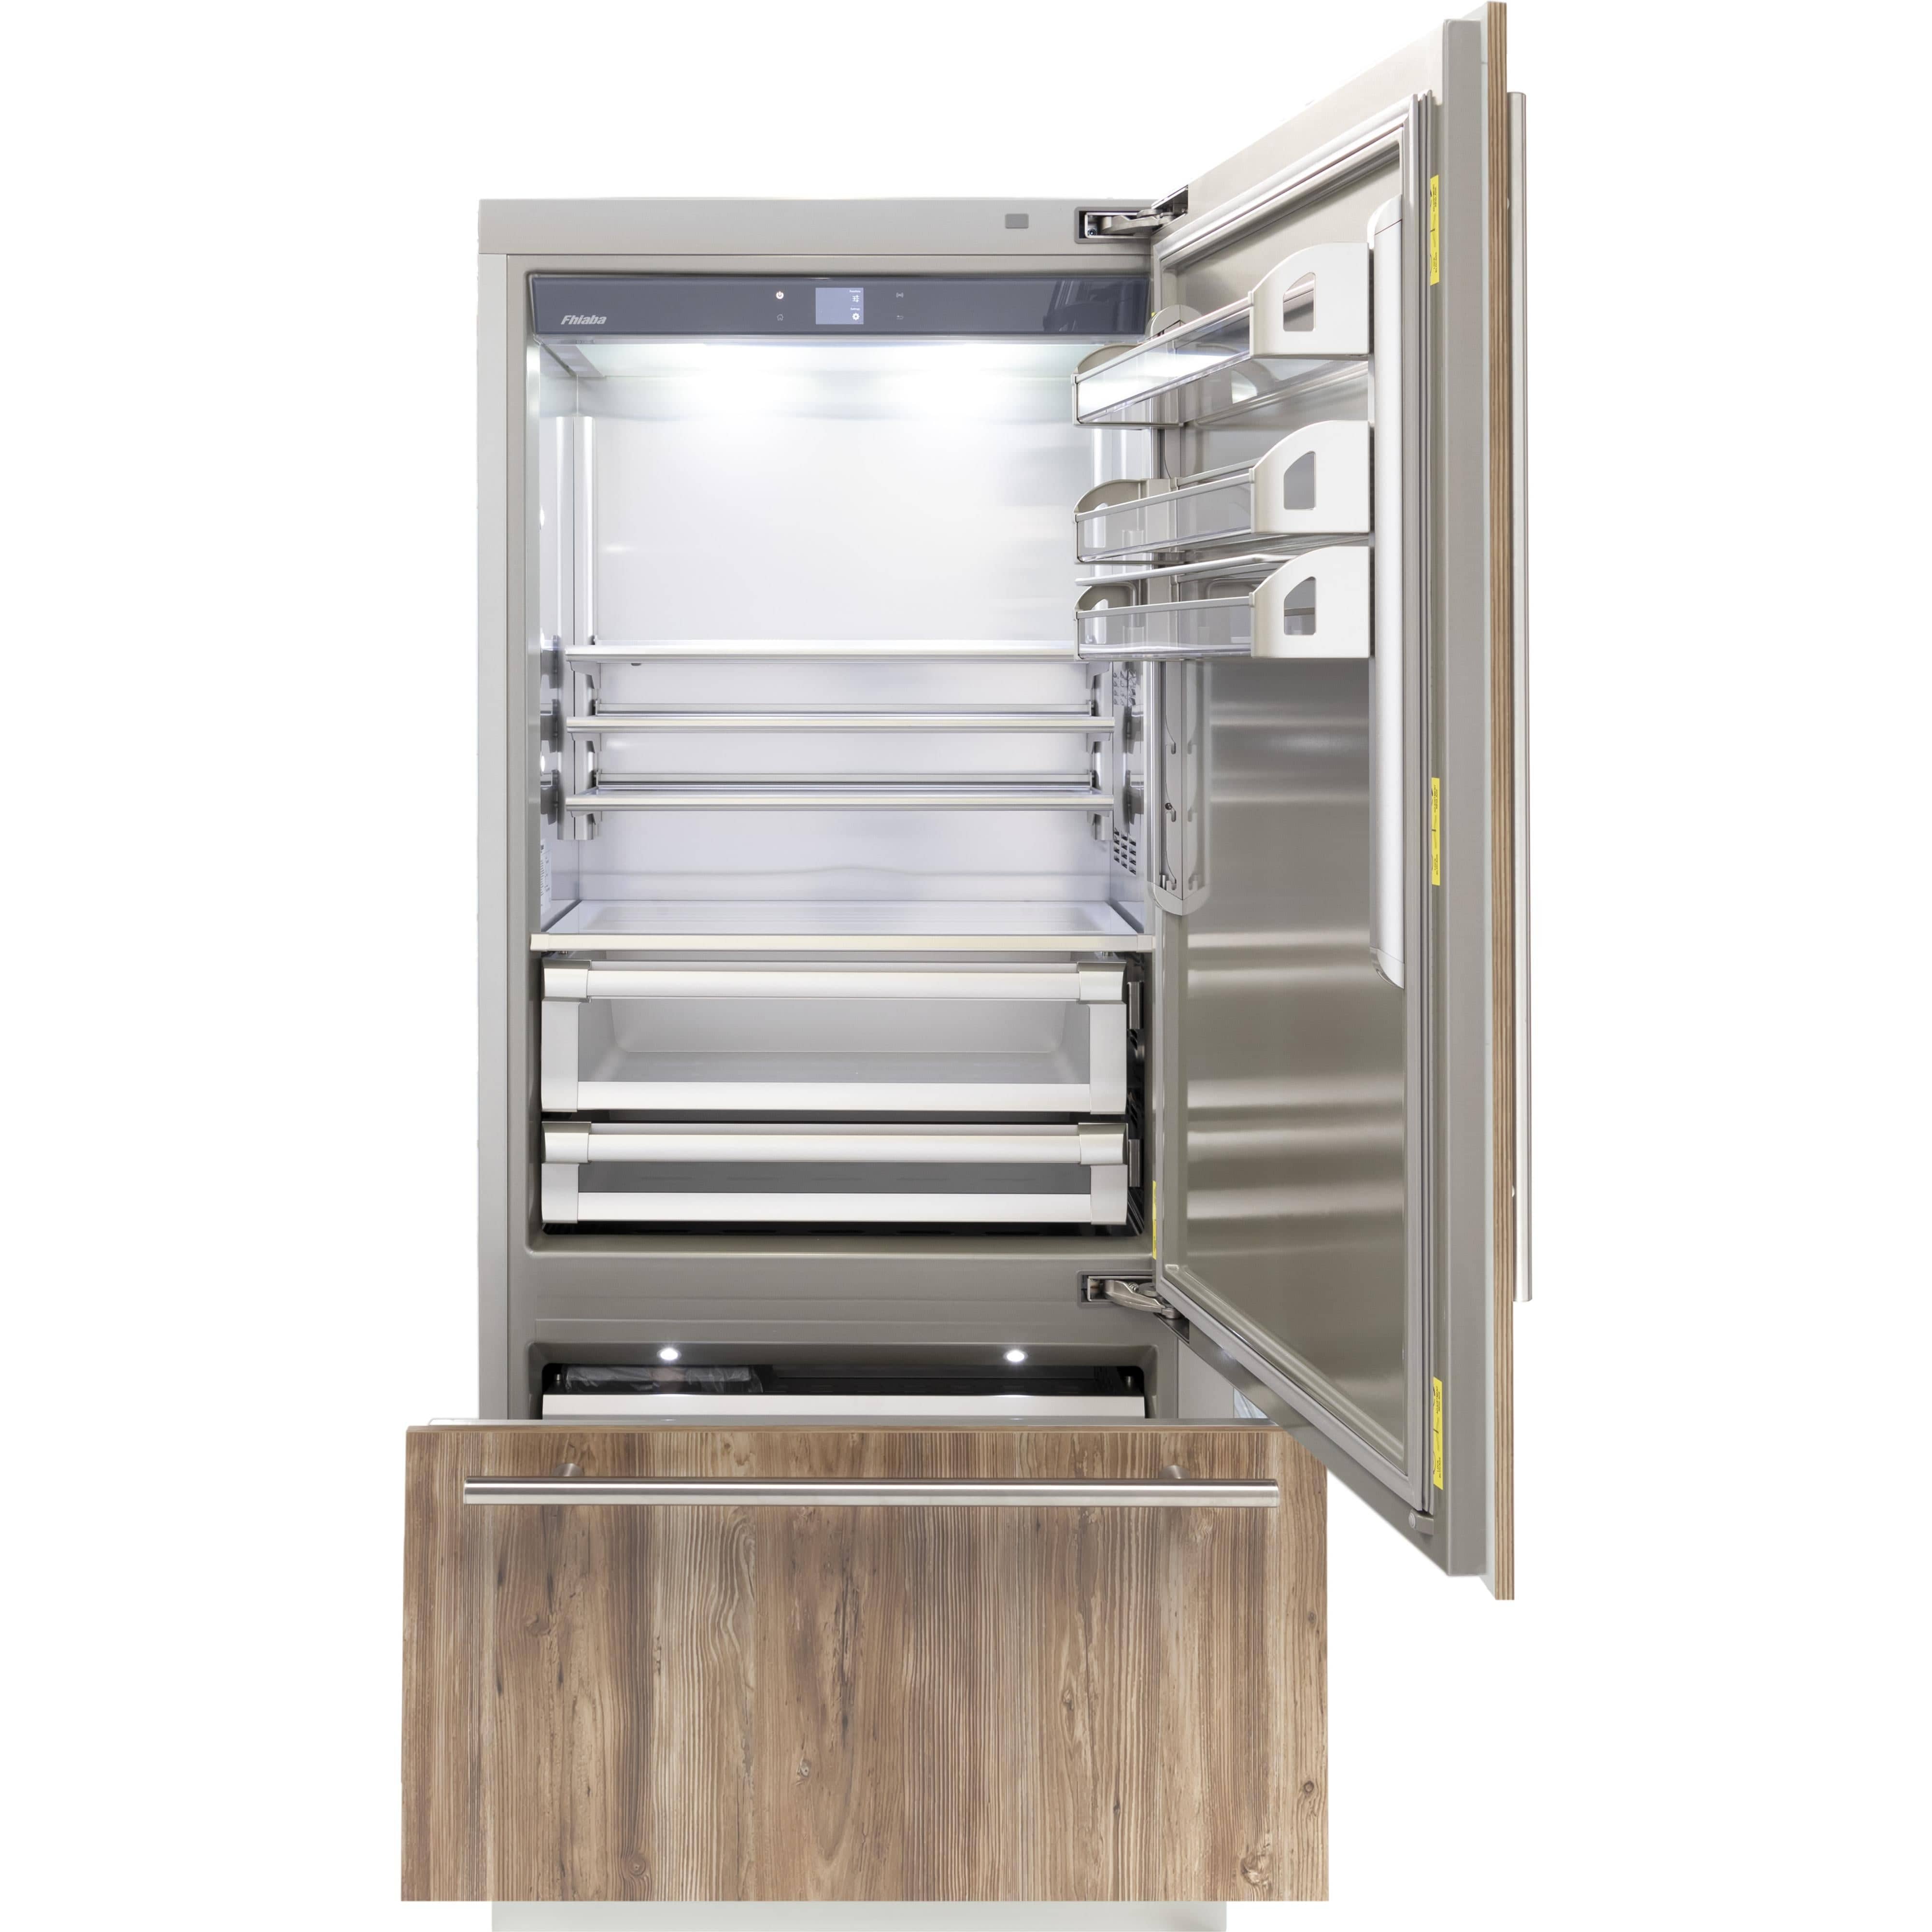 Fhiaba 36-inch, 18.7 cu.ft. Built-in Bottom Freezer Refrigerator with Interior Ice Maker FI36BI-RO1 Refrigerators FI36BIRO1 Luxury Appliances Direct